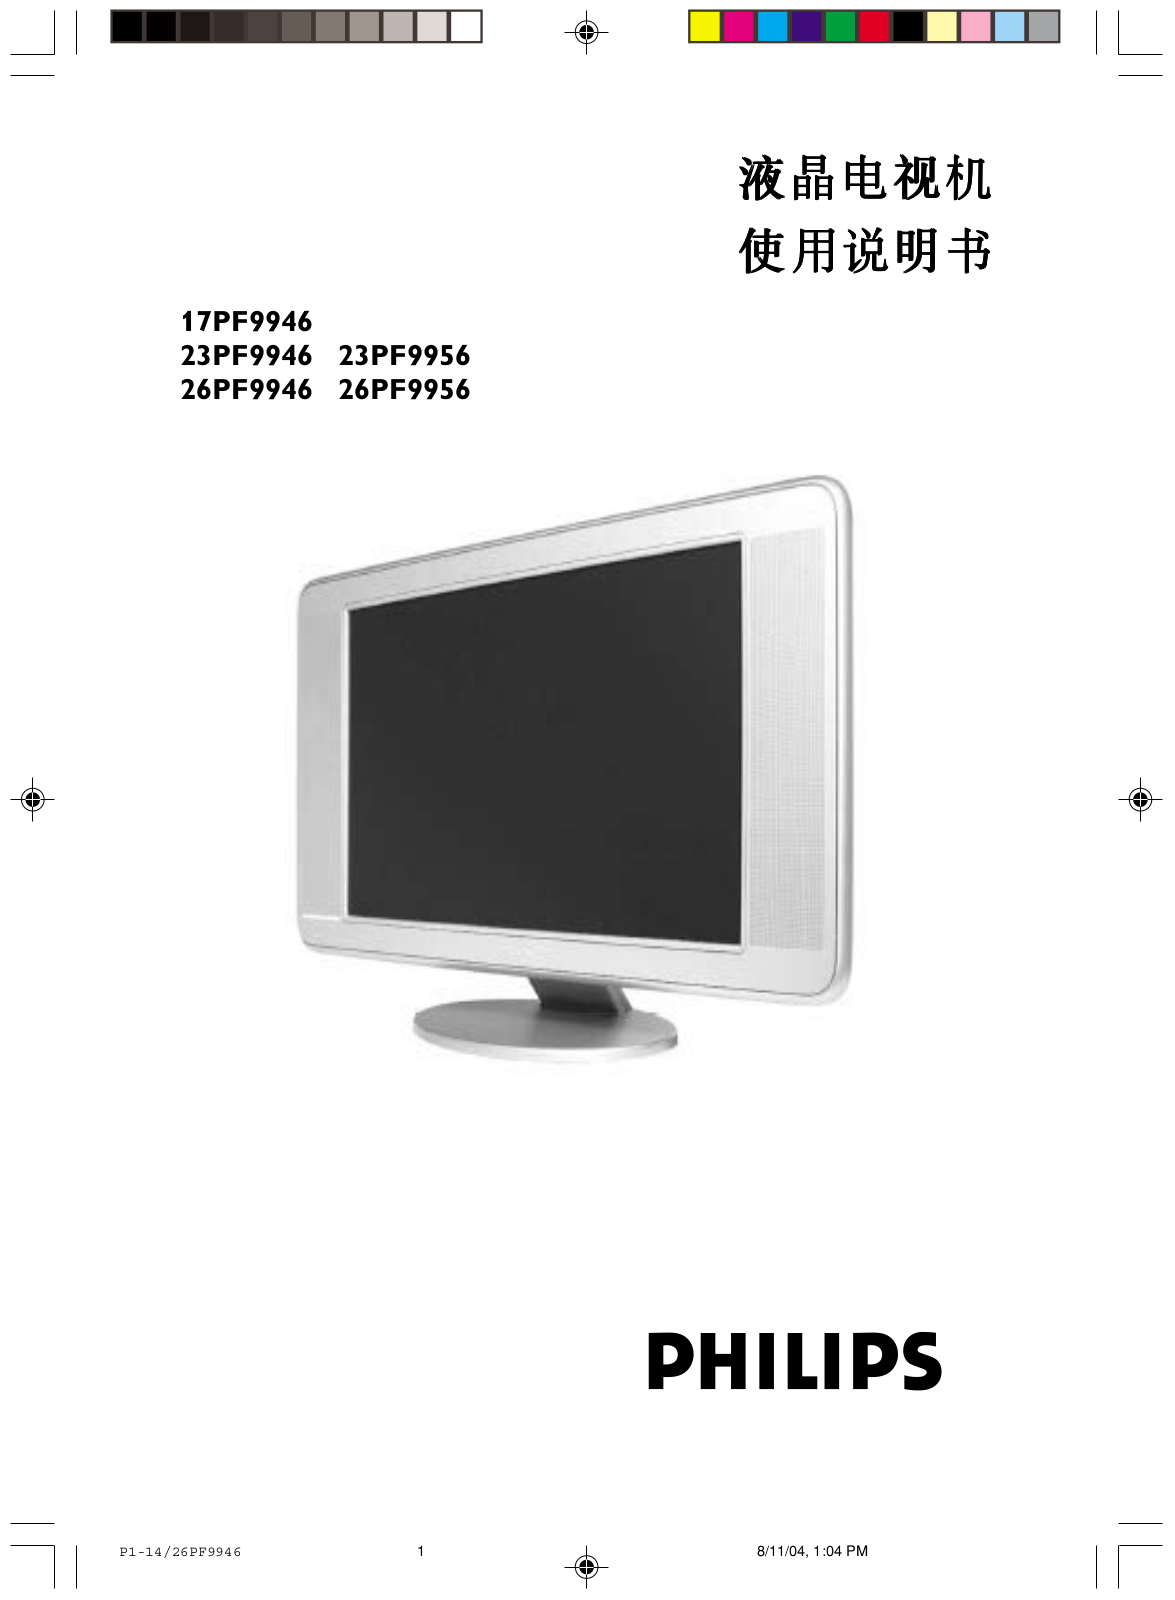 Philips 26PF9956/79, 26PF9946/79, 23PF9956/79, 23PF9946/79 User Manual